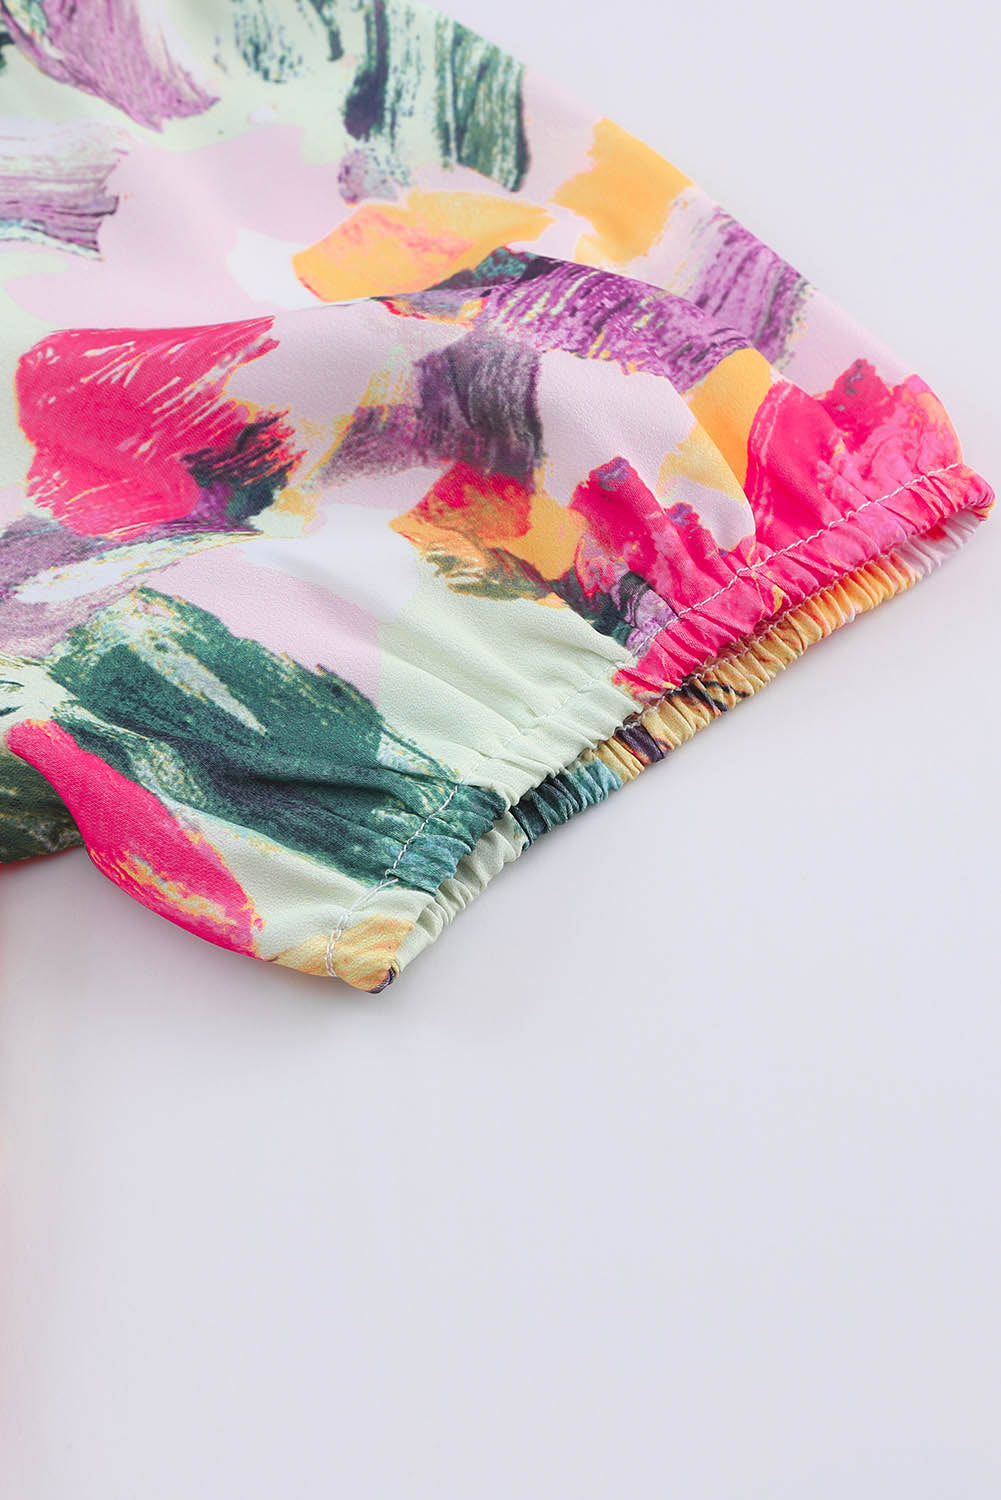 Mehrfarbiges, kurzärmliges Hemdblusenkleid mit Blumendruck